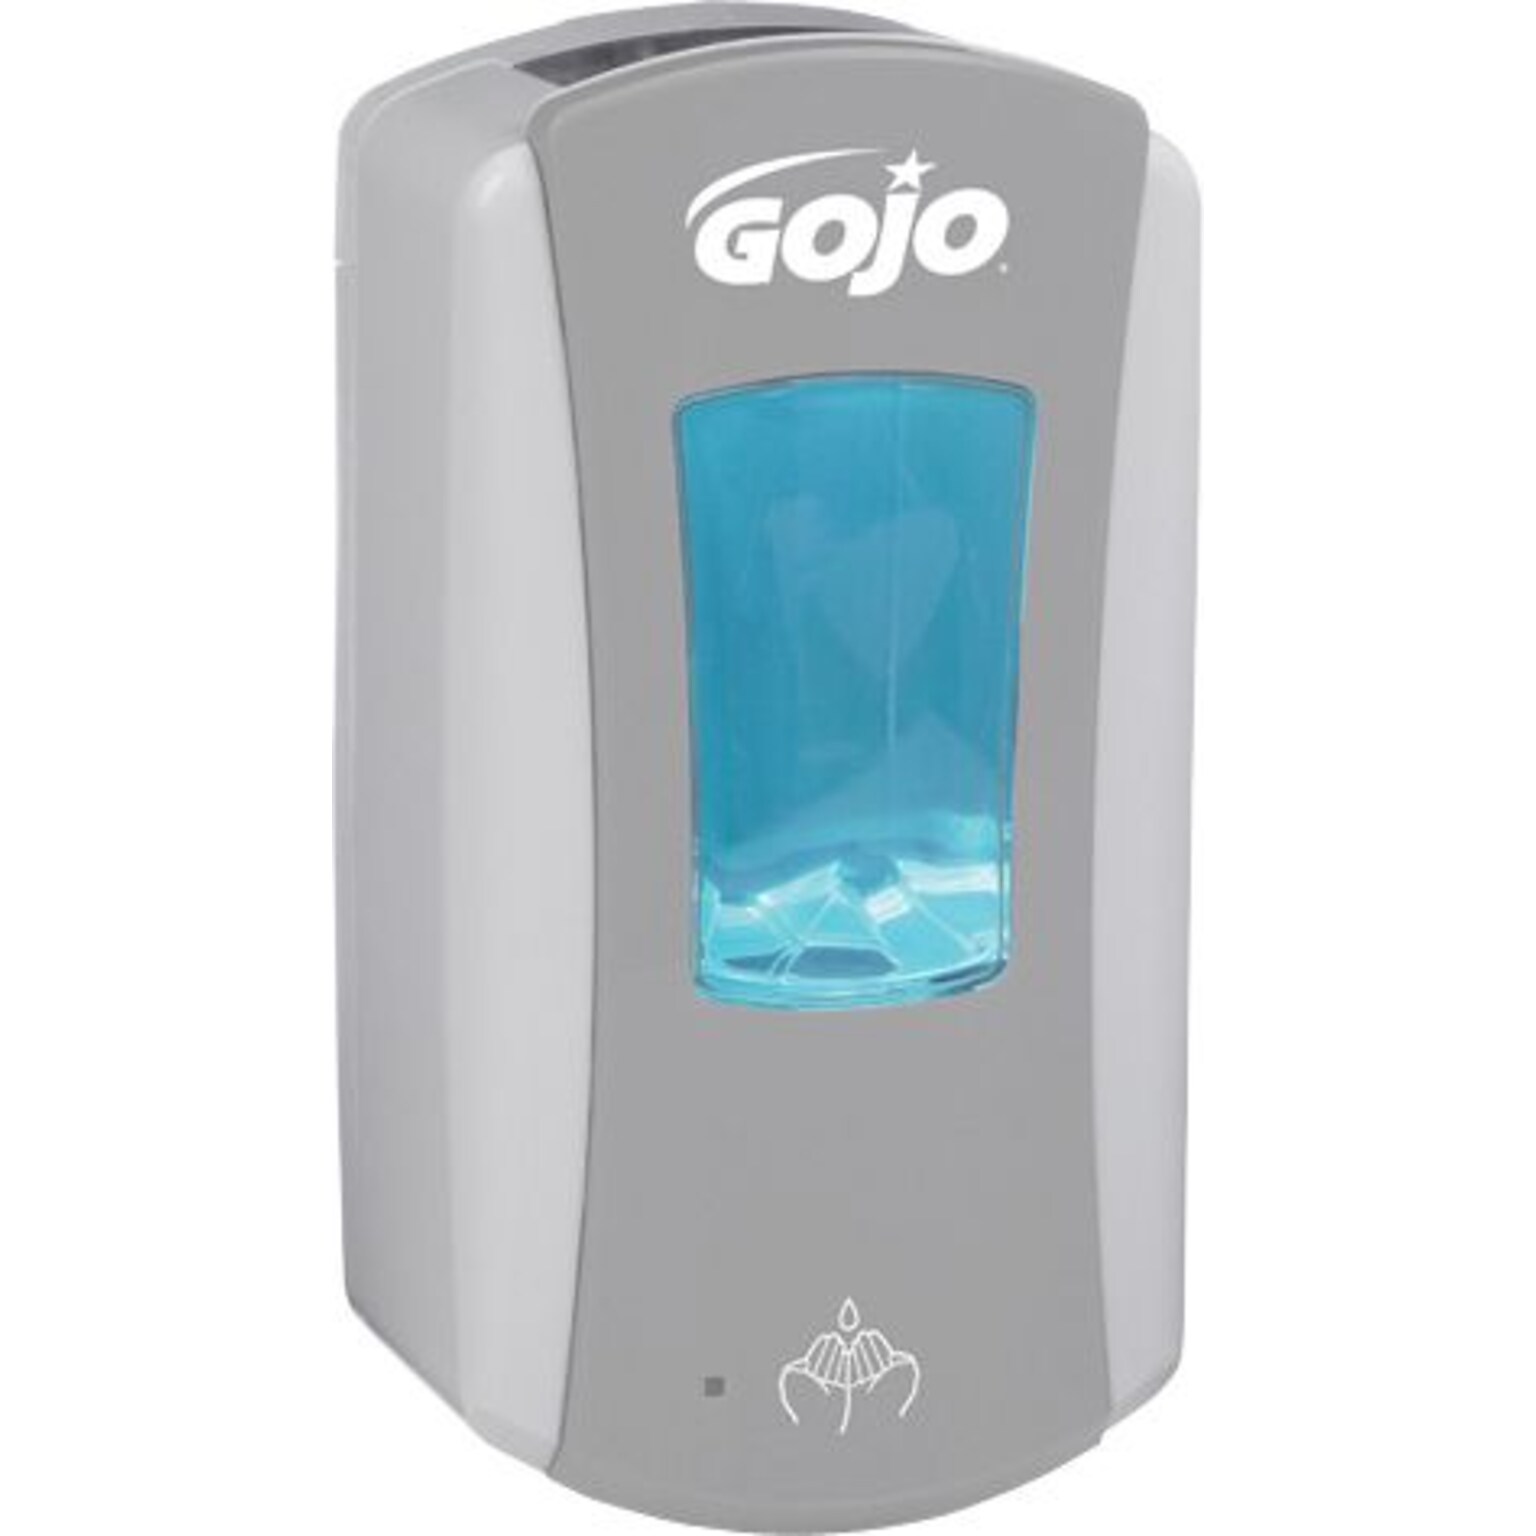 GOJO LTX 12 Automatic Wall Mounted Hand Soap Dispenser, Gray/Silver (1984-04)